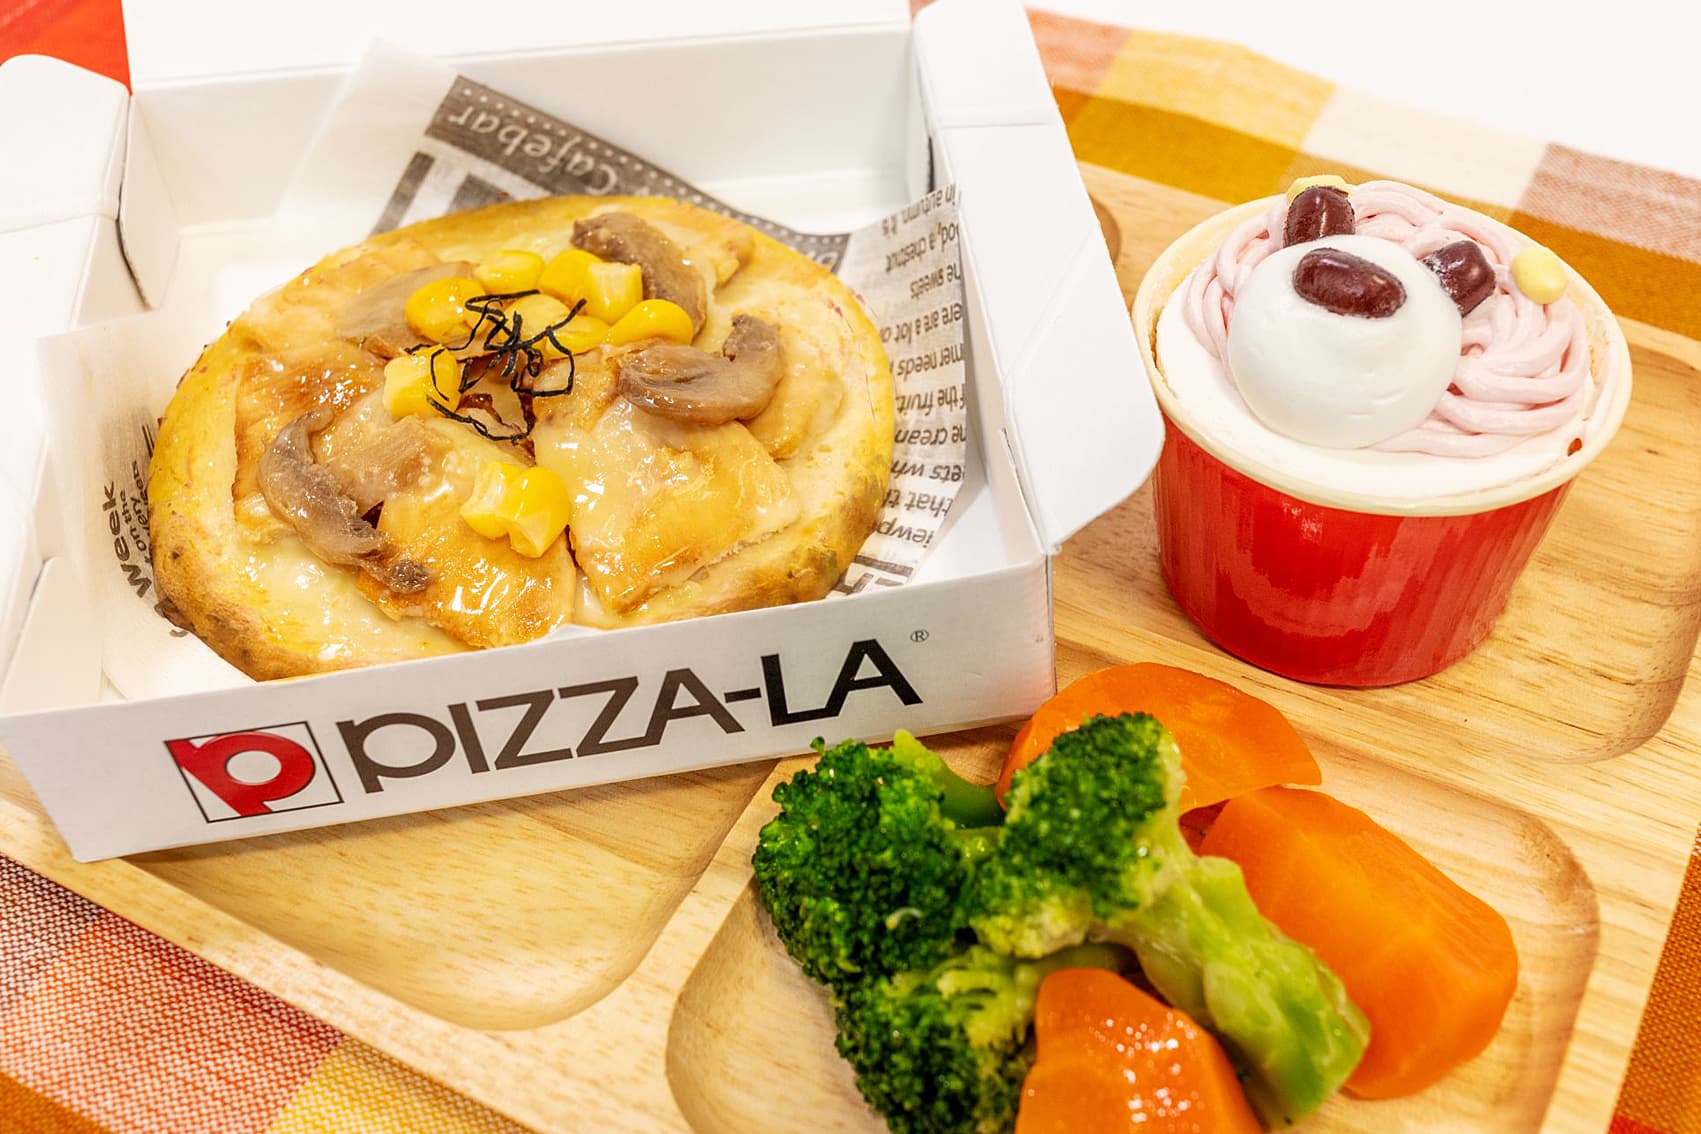 Pizza-La 테리야키 치킨 & 두유 딸기 케이크 세트